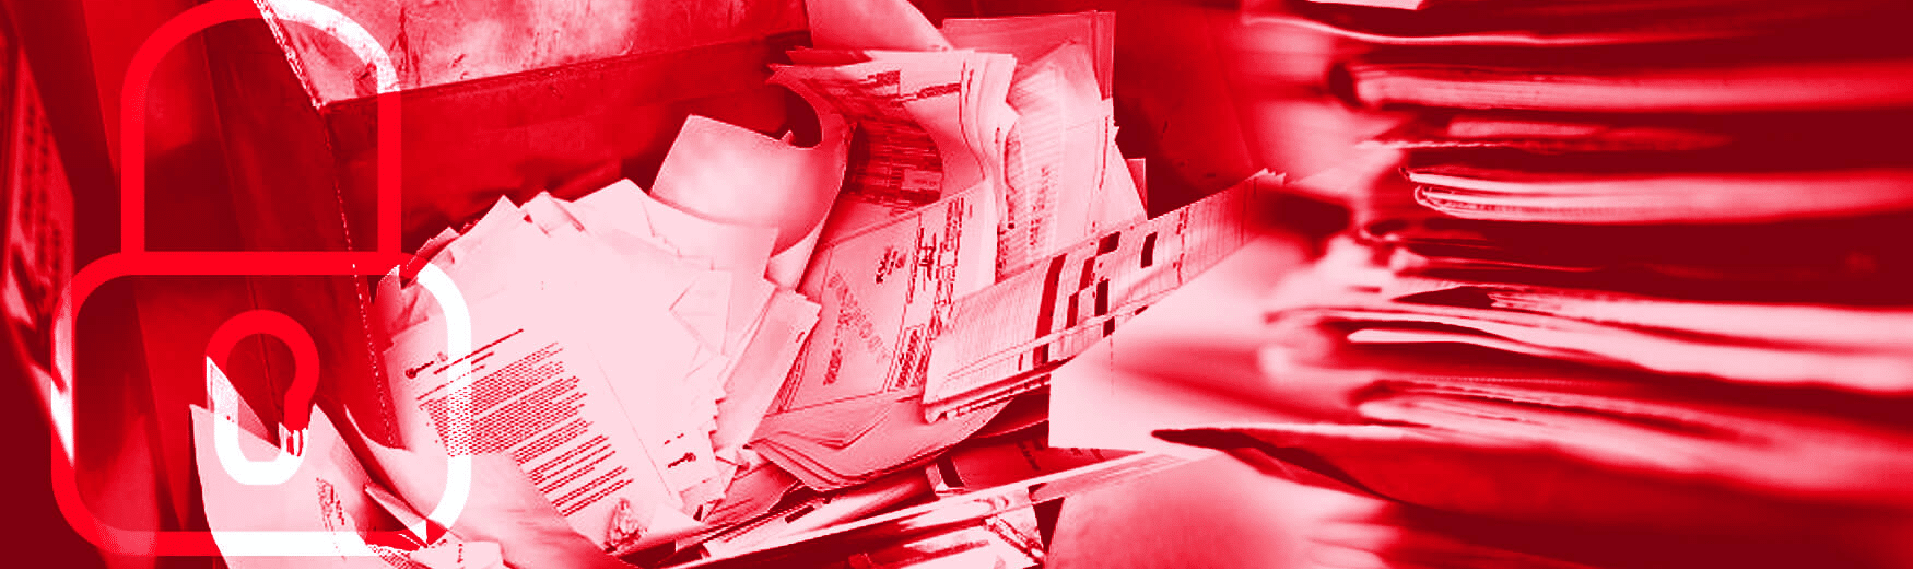 Secure document destruction image dd 1 - hard drive shredding | secure paper shredding | hdd wiping